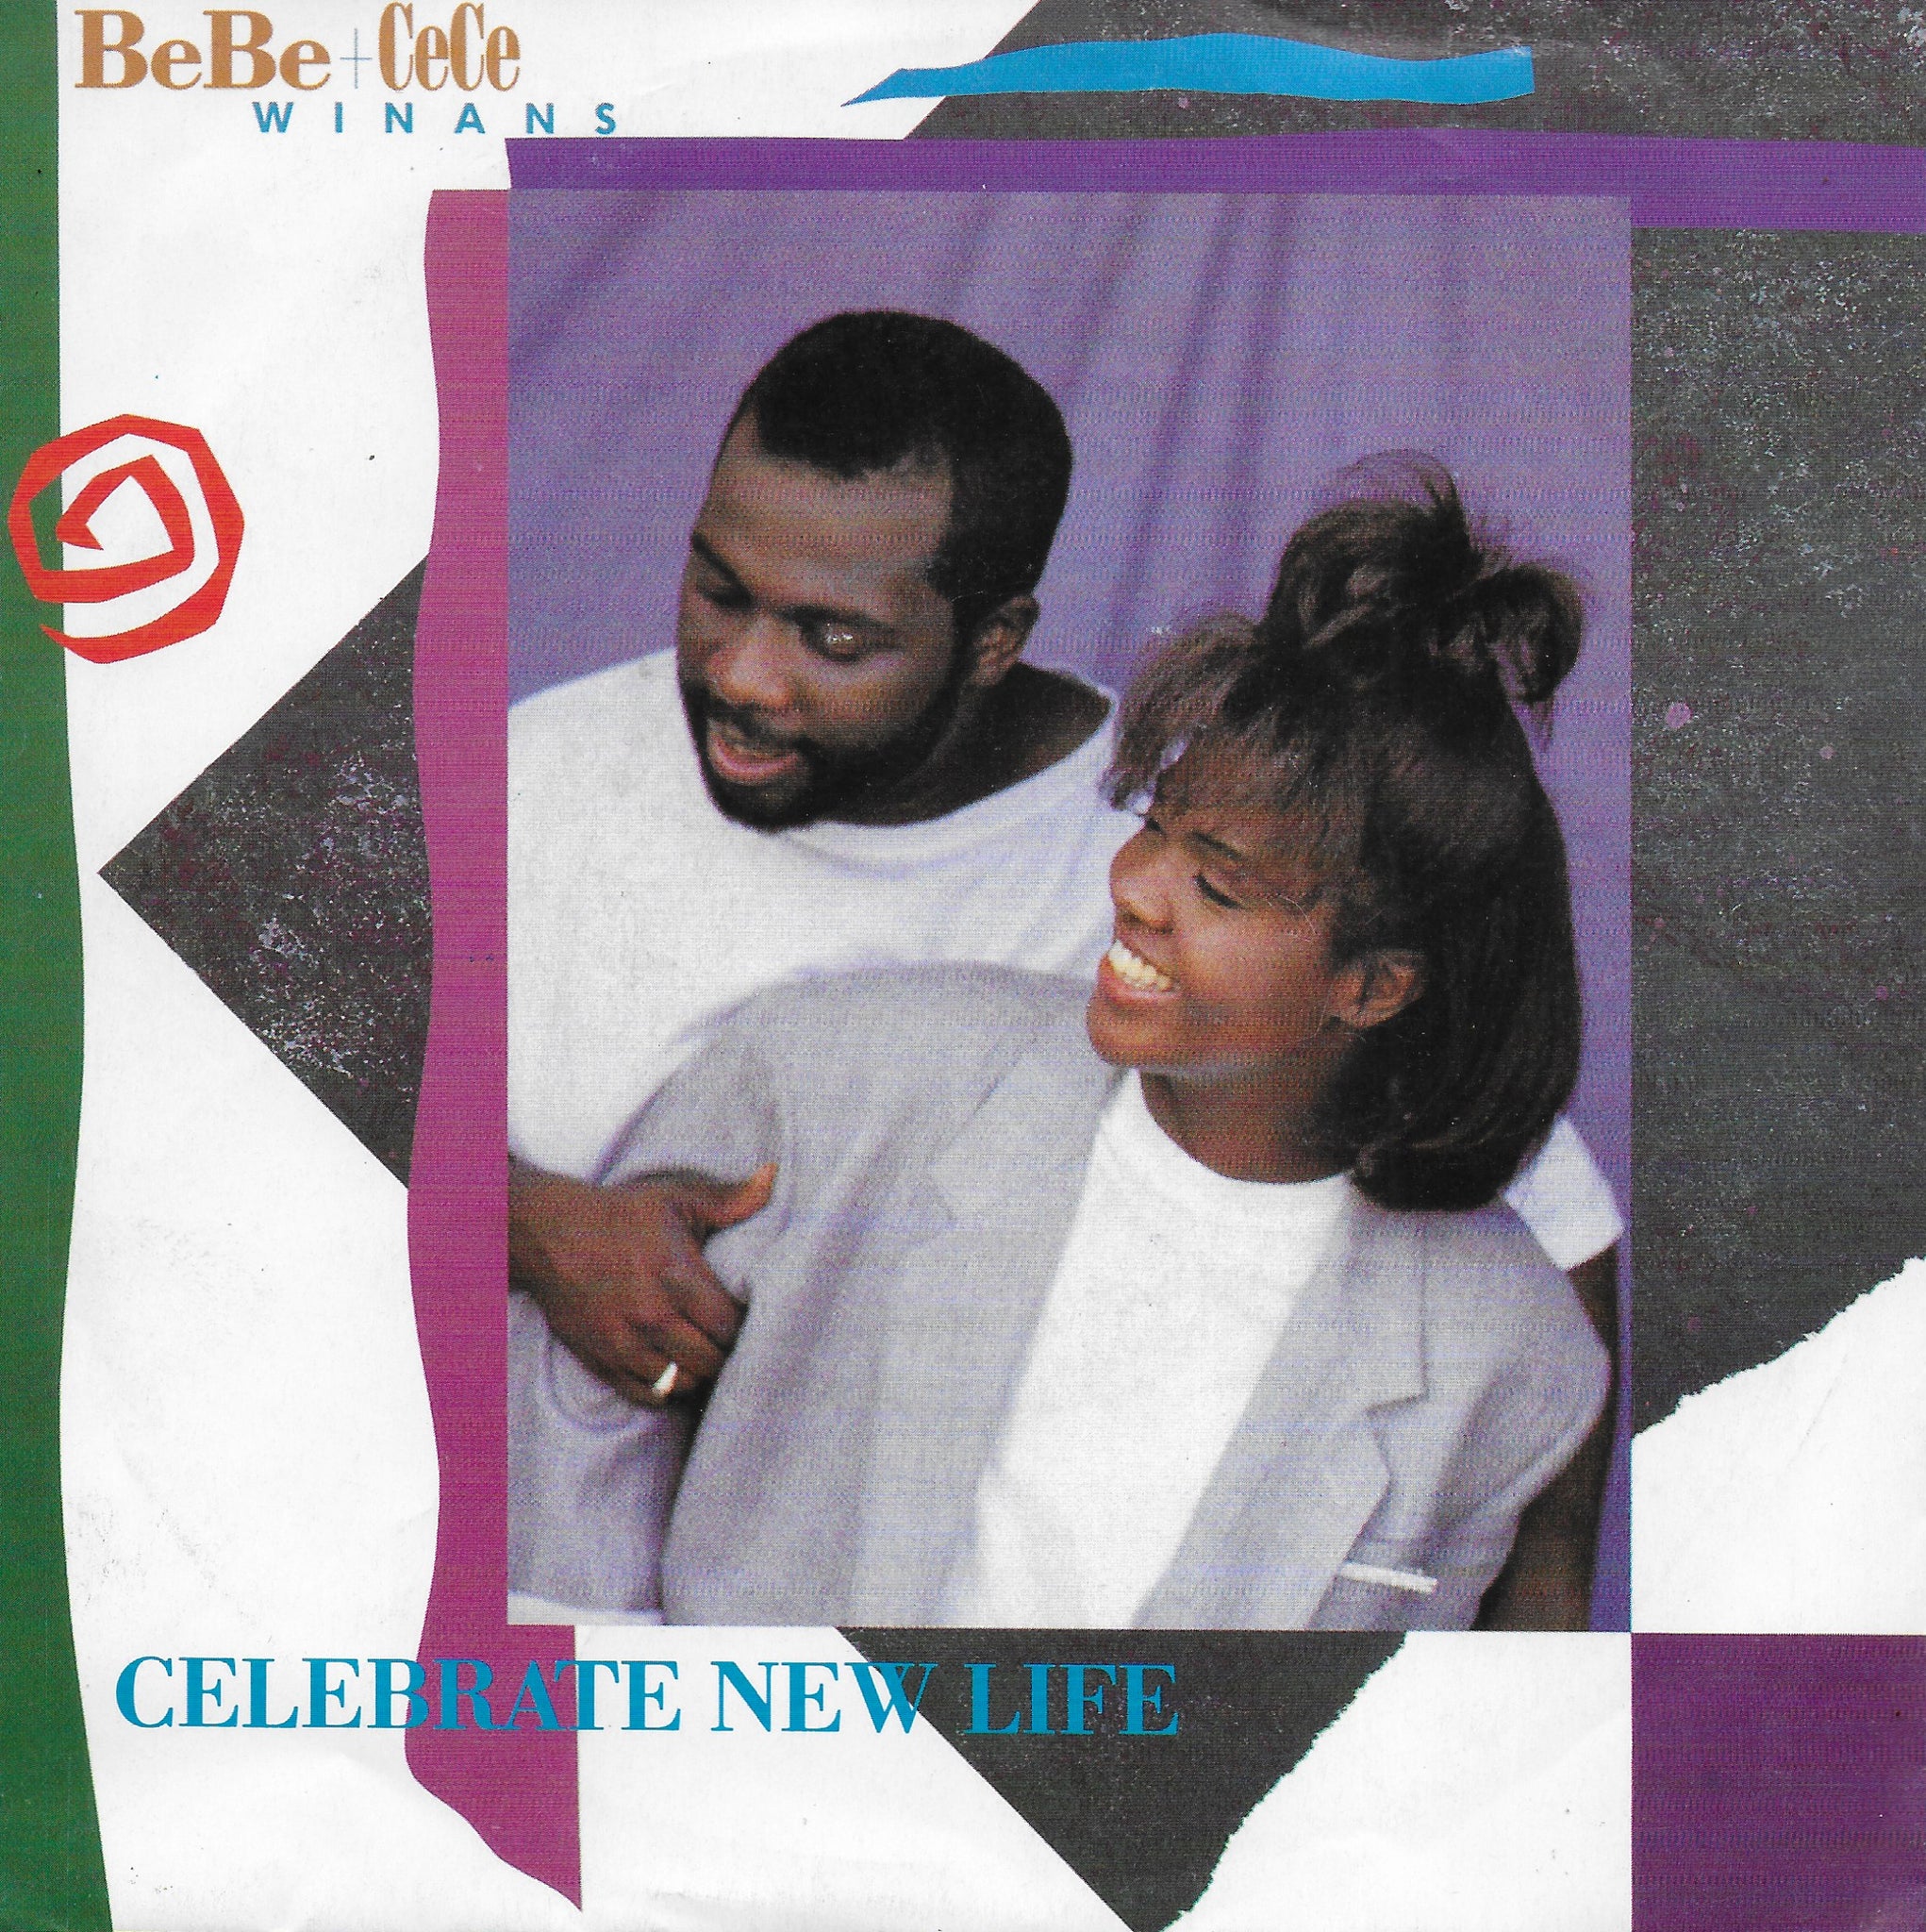 BeBe & CeCe Winans - Celebrate new life